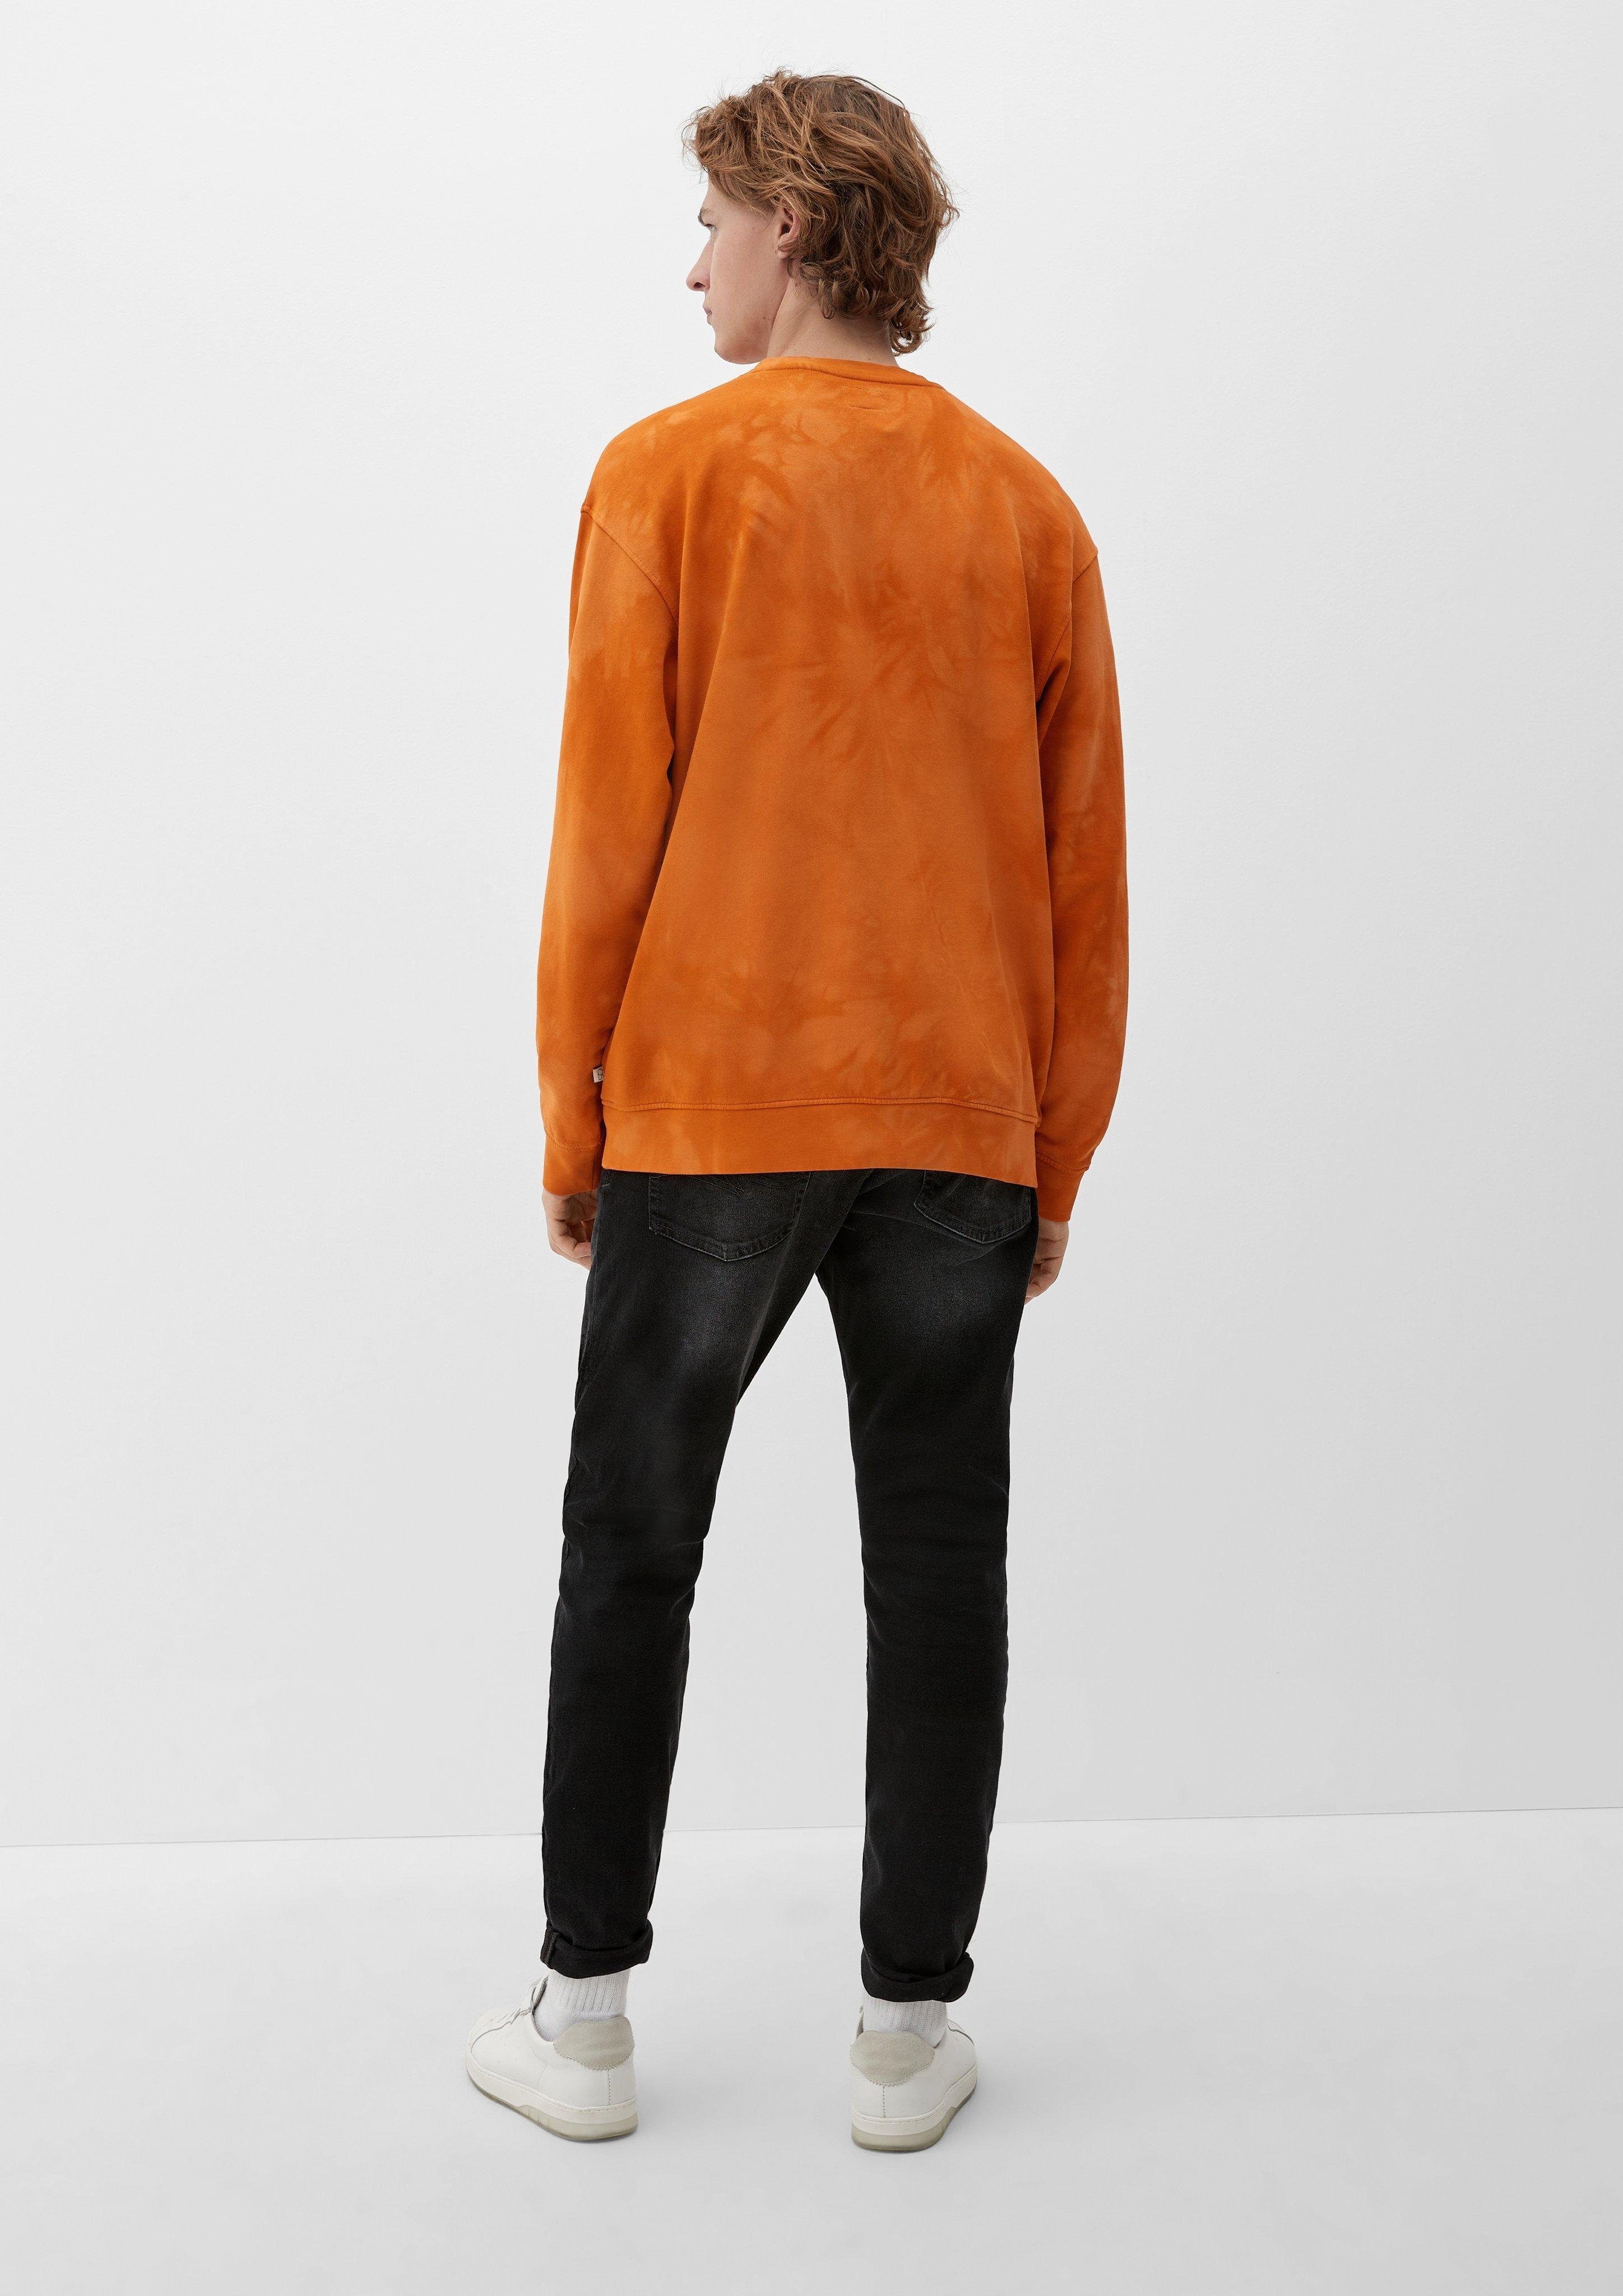 Sweatshirt in Batik-Optik QS Stickerei orange Sweatshirt